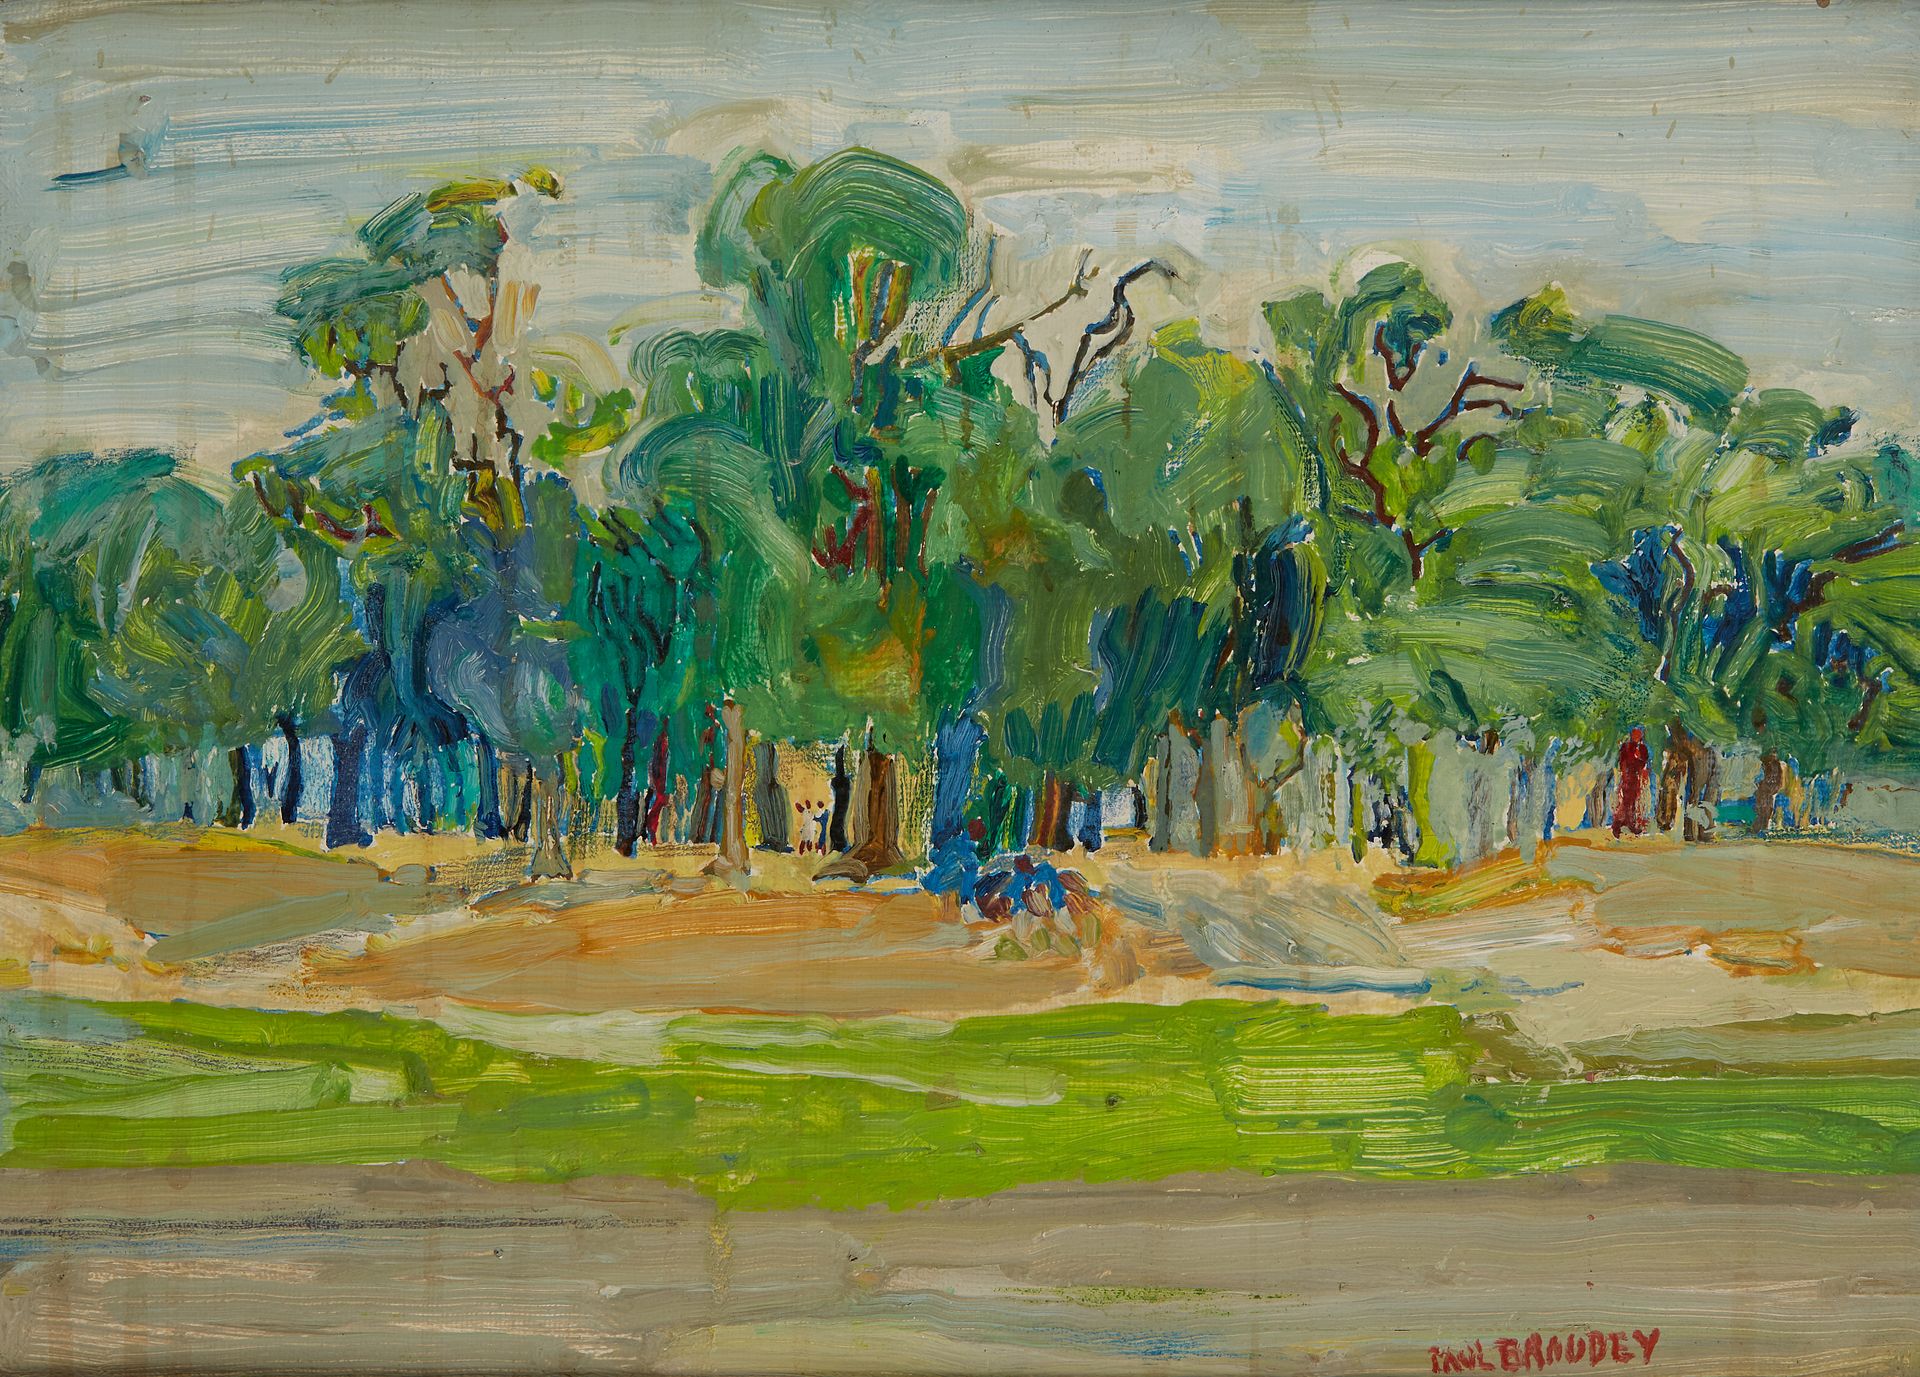 Null Paul BRAUDEY (生于1930年)


圣日耳曼恩拉伊森林景观


布面油画，右下角有签名，位于画框的背面


24 x 33 cm